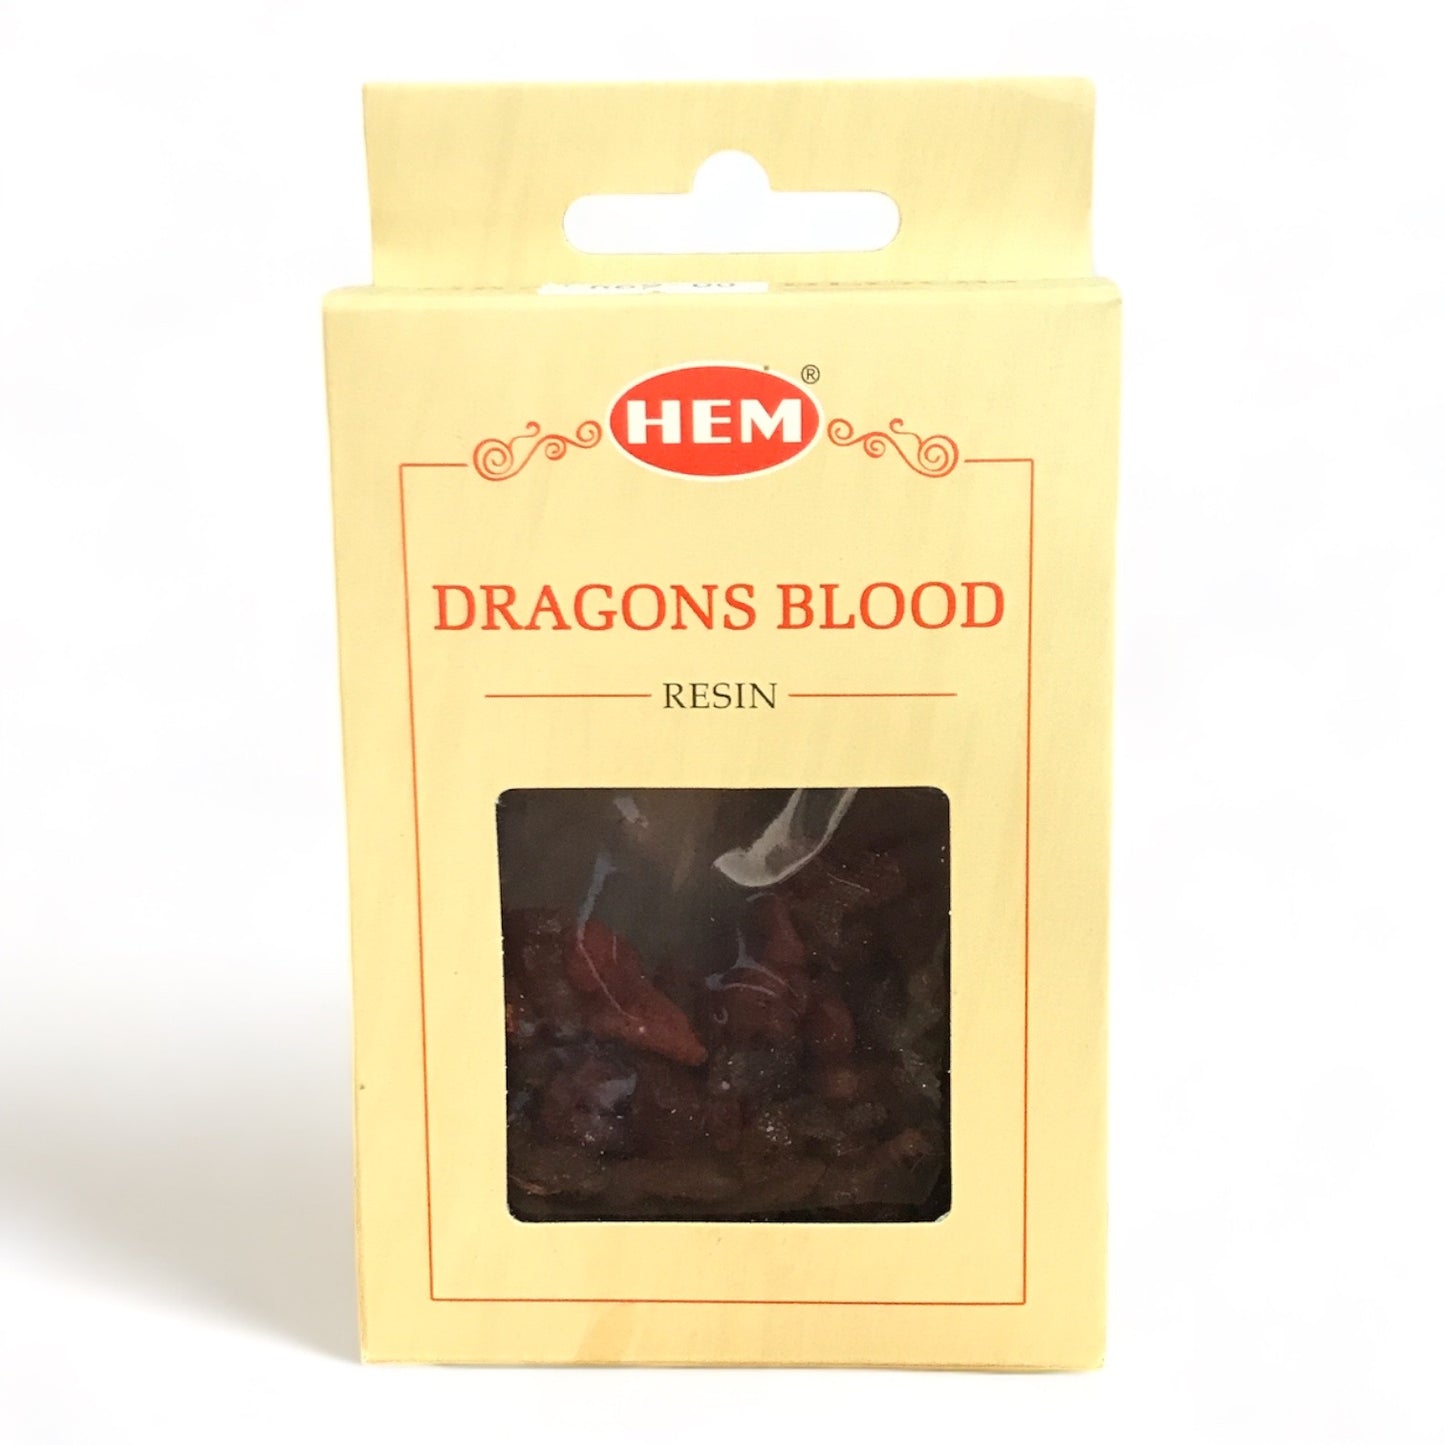 Dragons Blood Resin - Hem - 30g